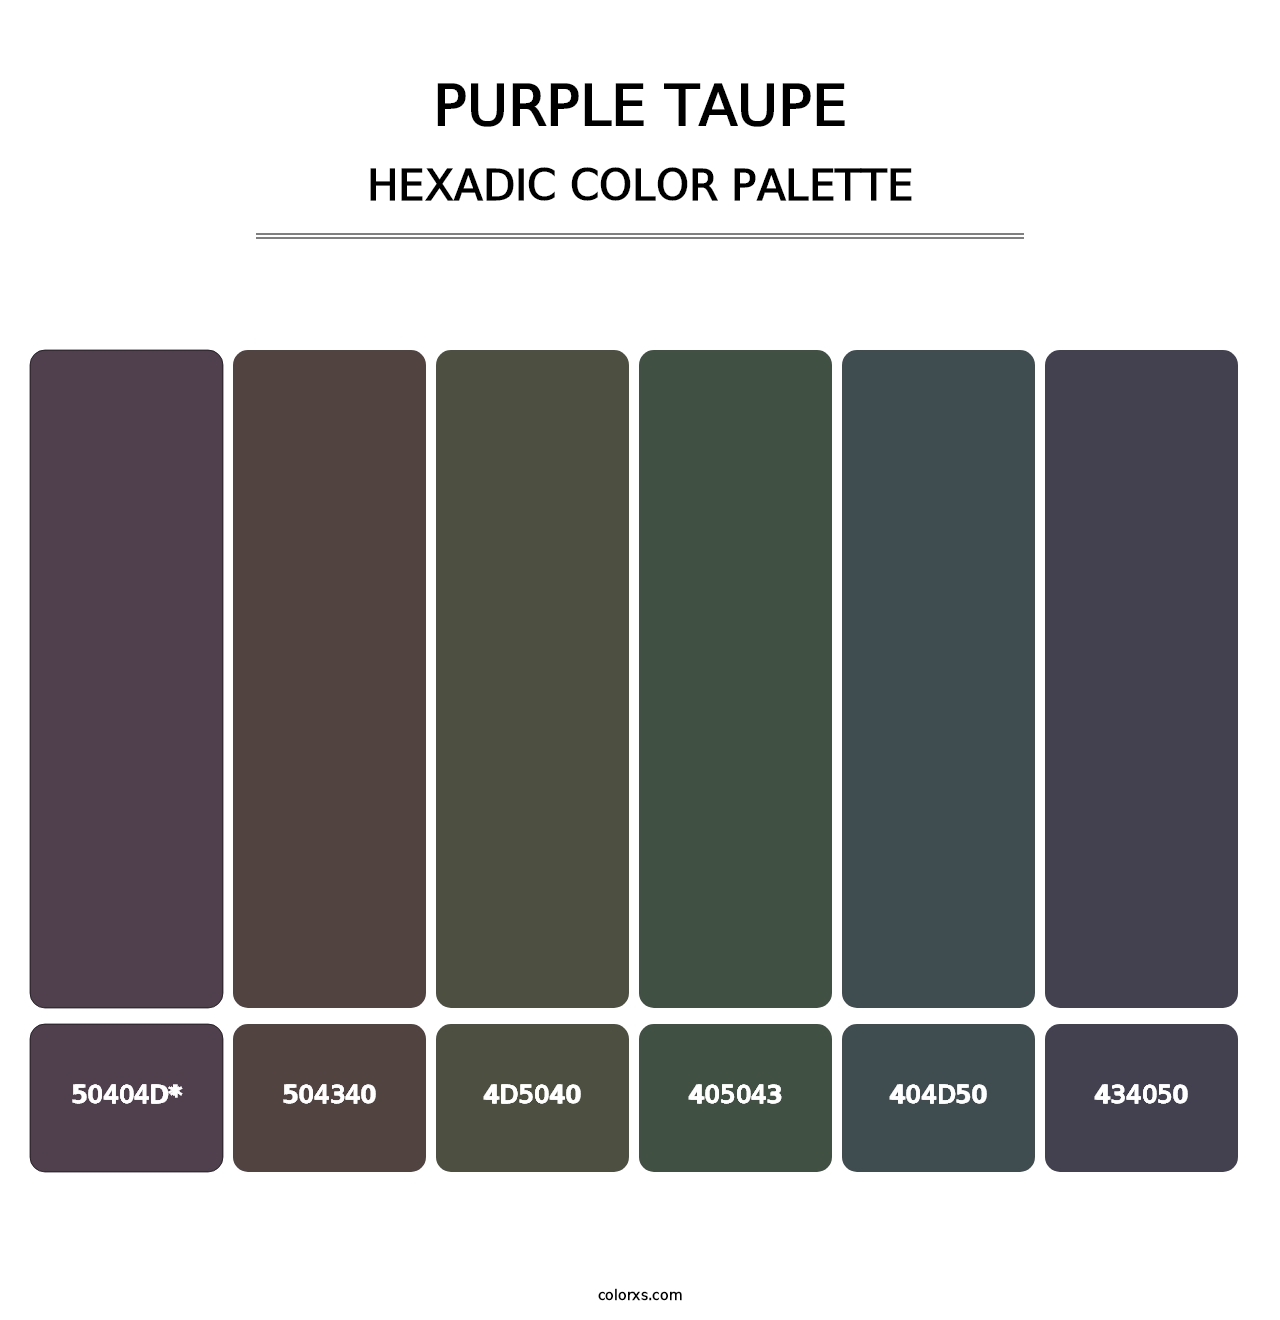 Purple Taupe - Hexadic Color Palette